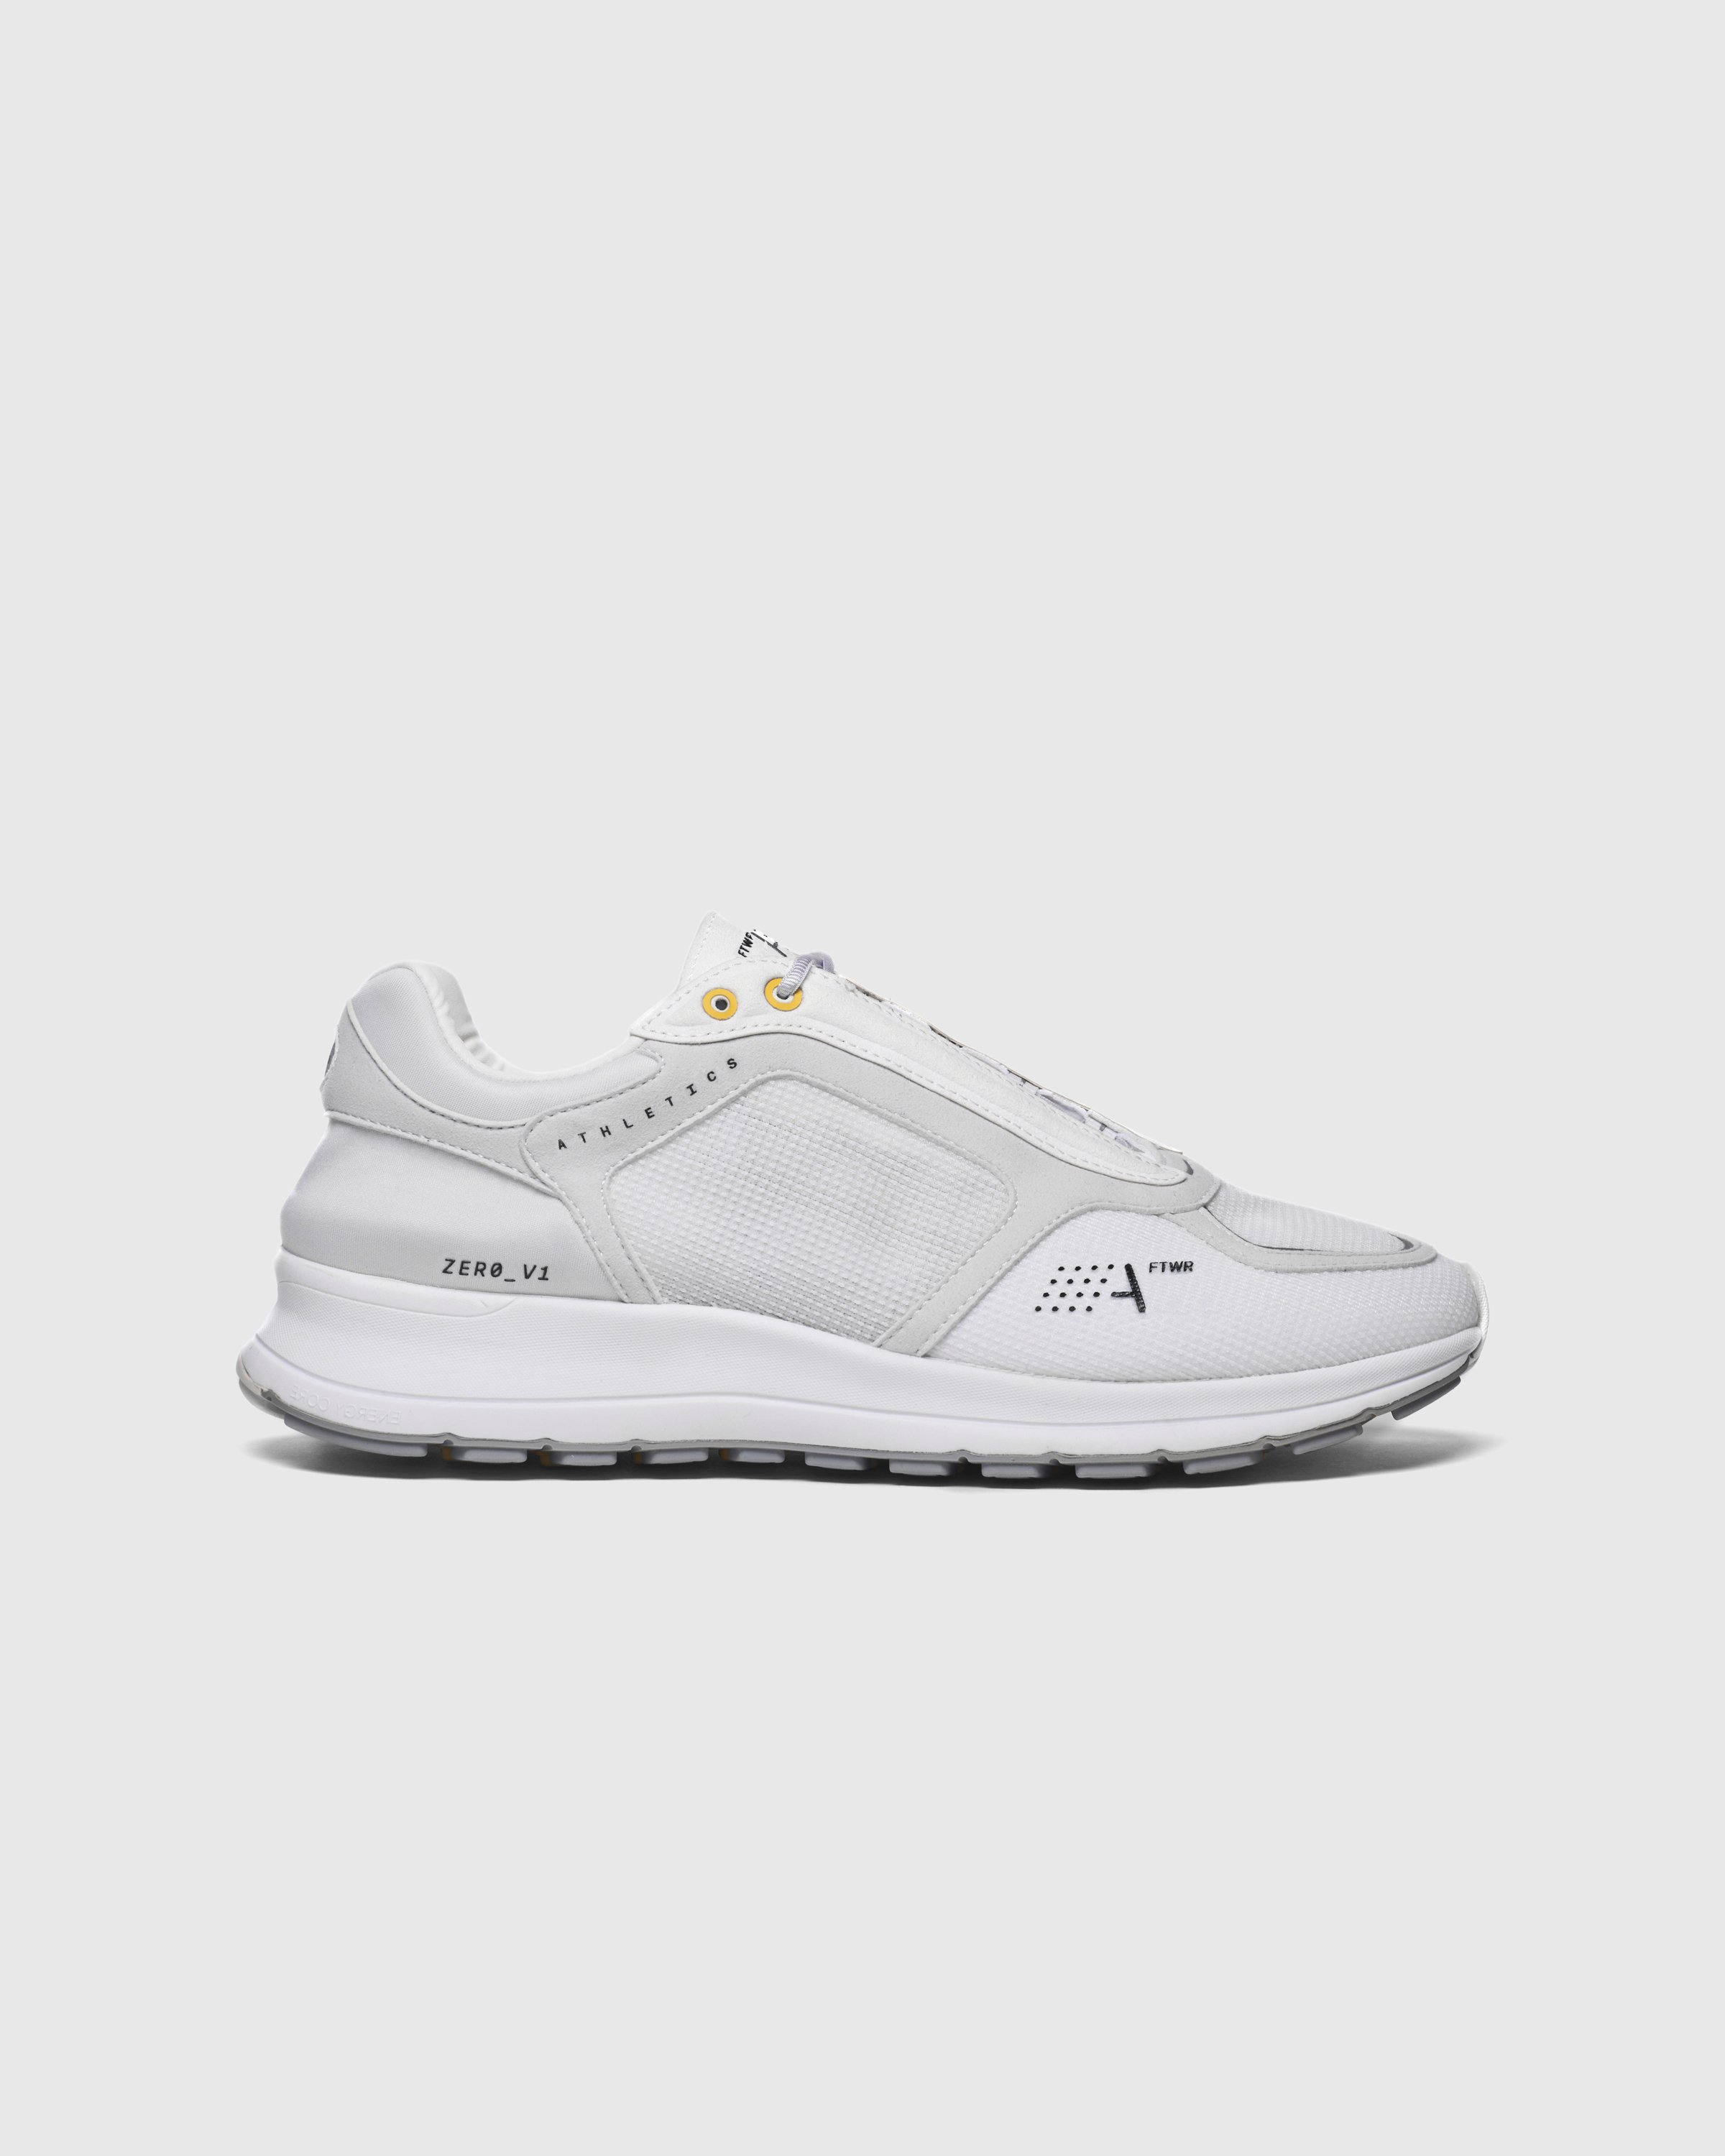 Athletics Footwear - Zero V1 White - Footwear - White - Image 1